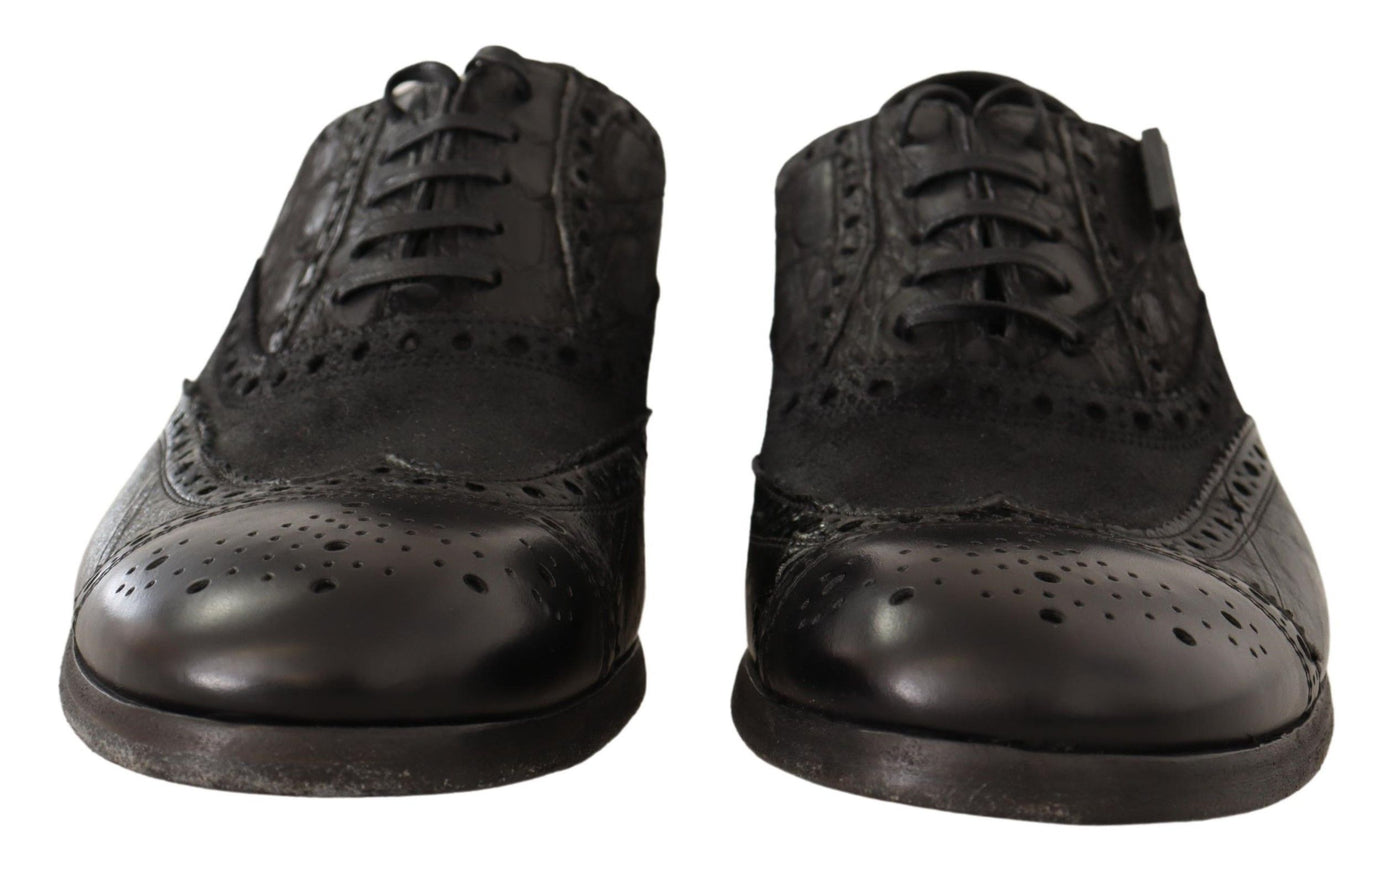 Dolce & Gabbana Black Leather Brogue Wing Tip Men Formal Shoes